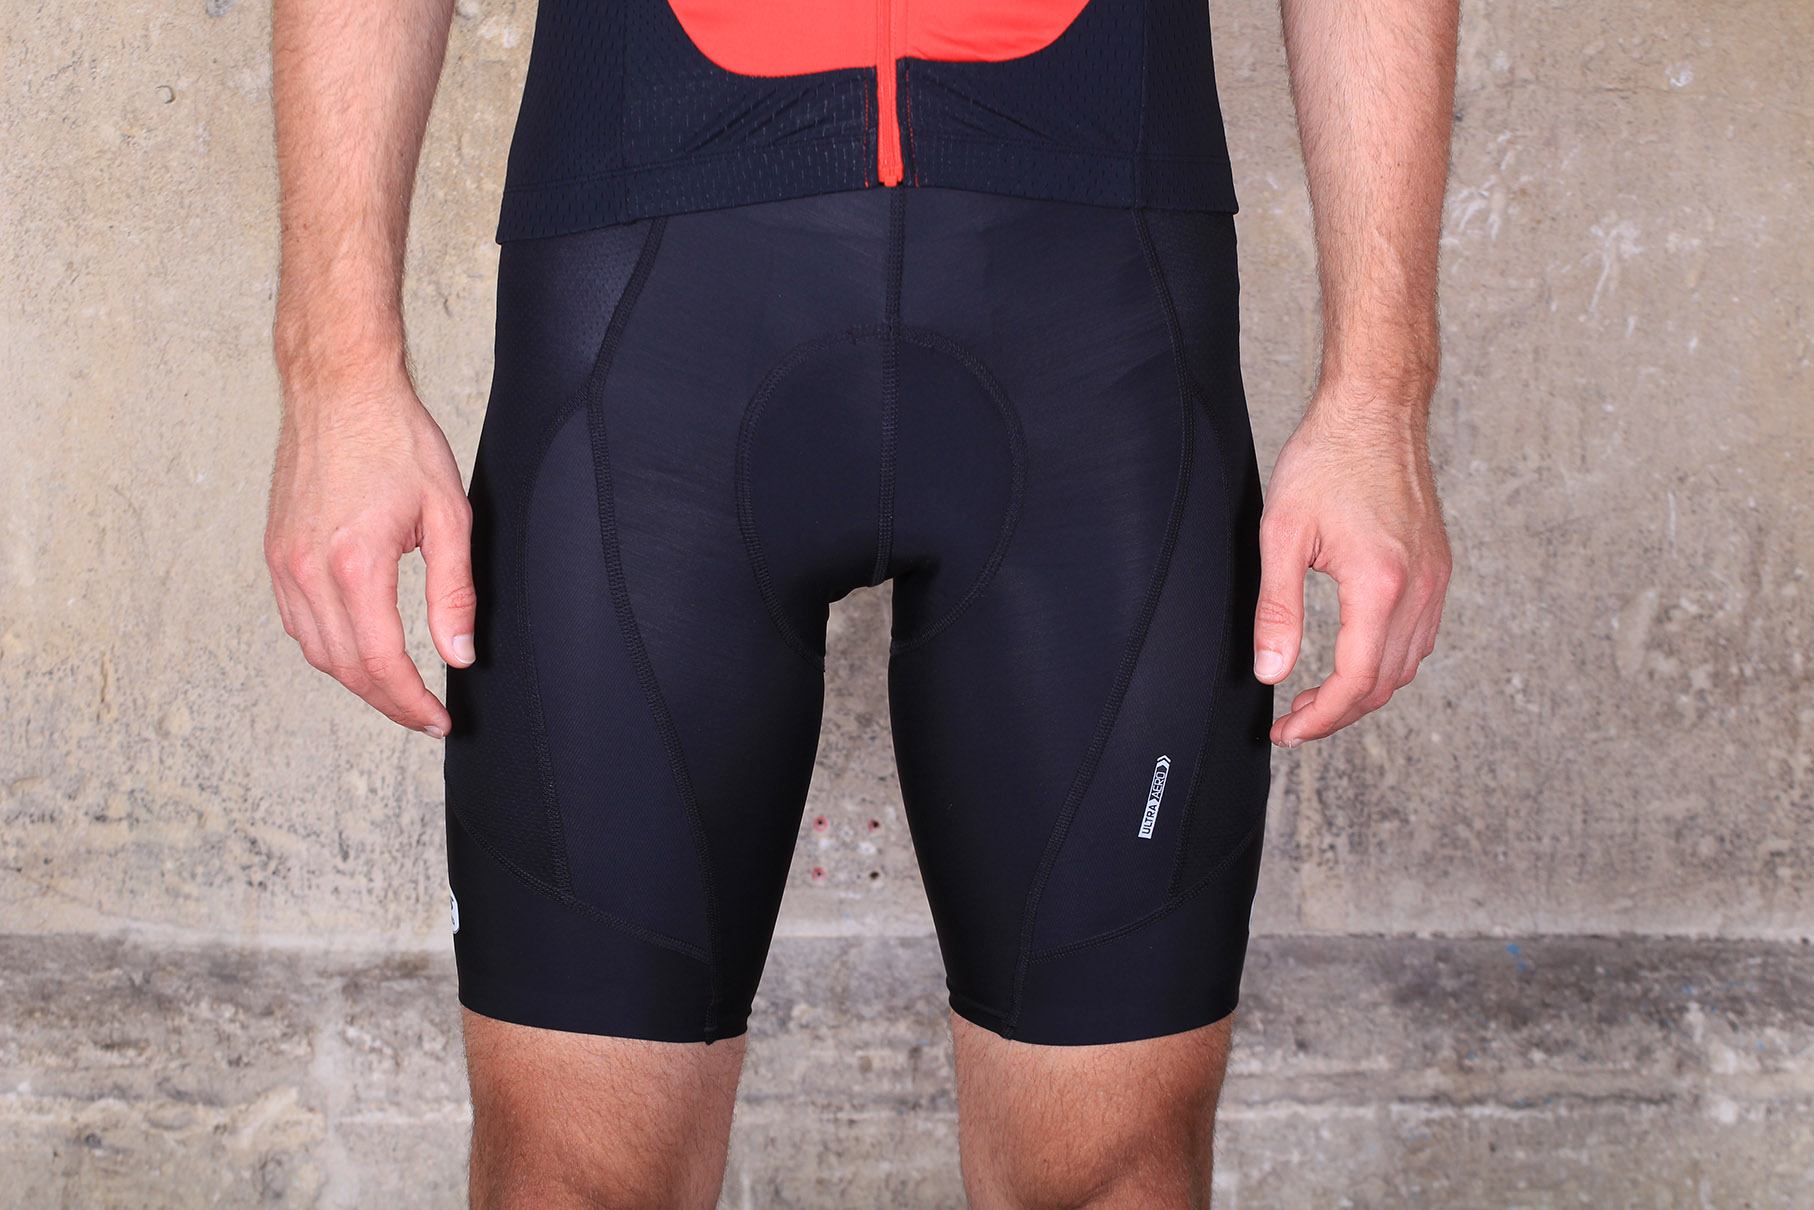 sugoi cycling bib shorts